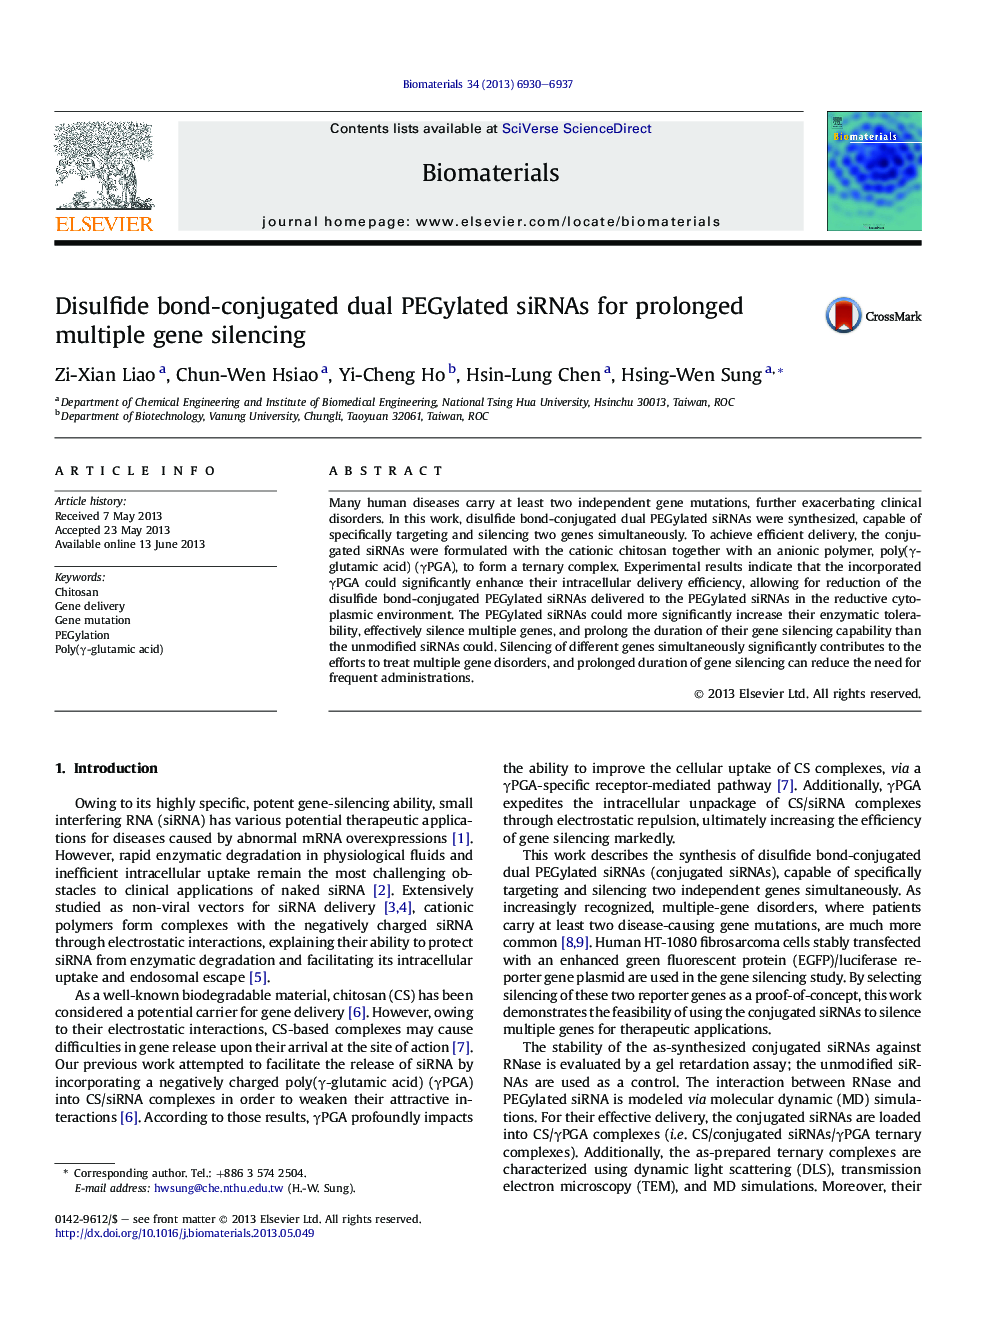 Disulfide bond-conjugated dual PEGylated siRNAs for prolonged multiple gene silencing